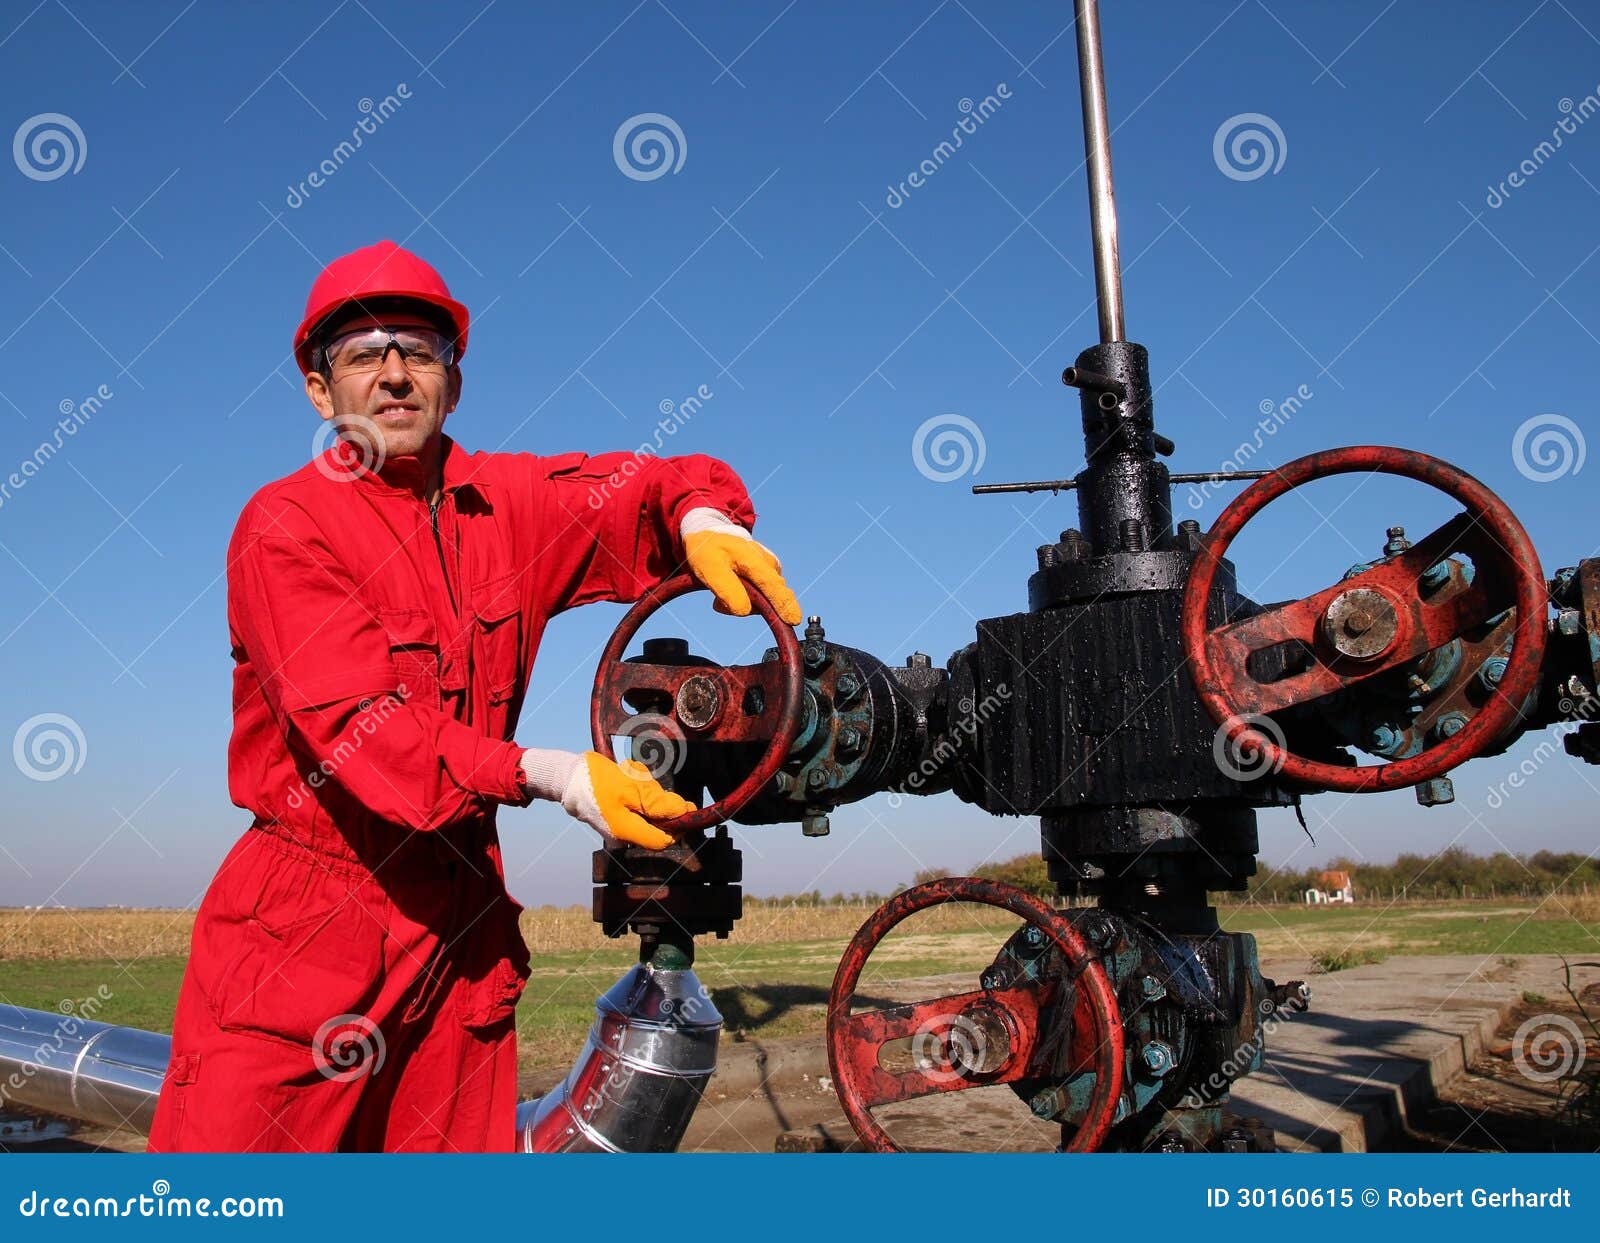 oil rig equipment field manual download